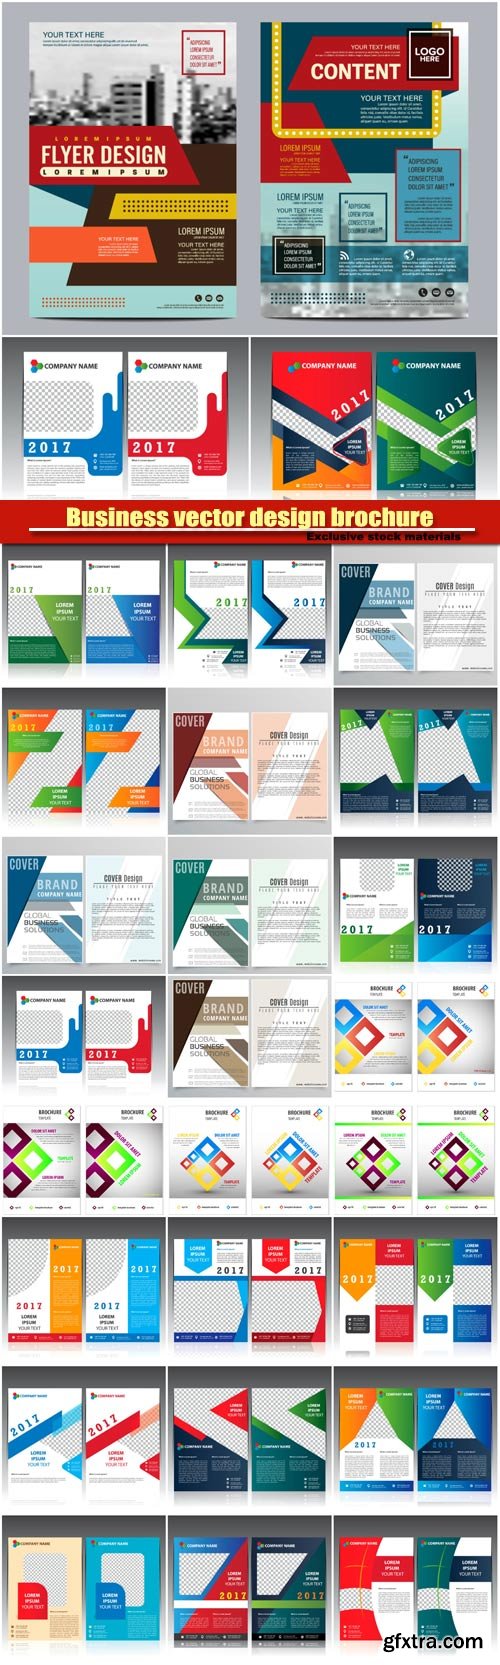 Business vector design brochure, creative flyer template